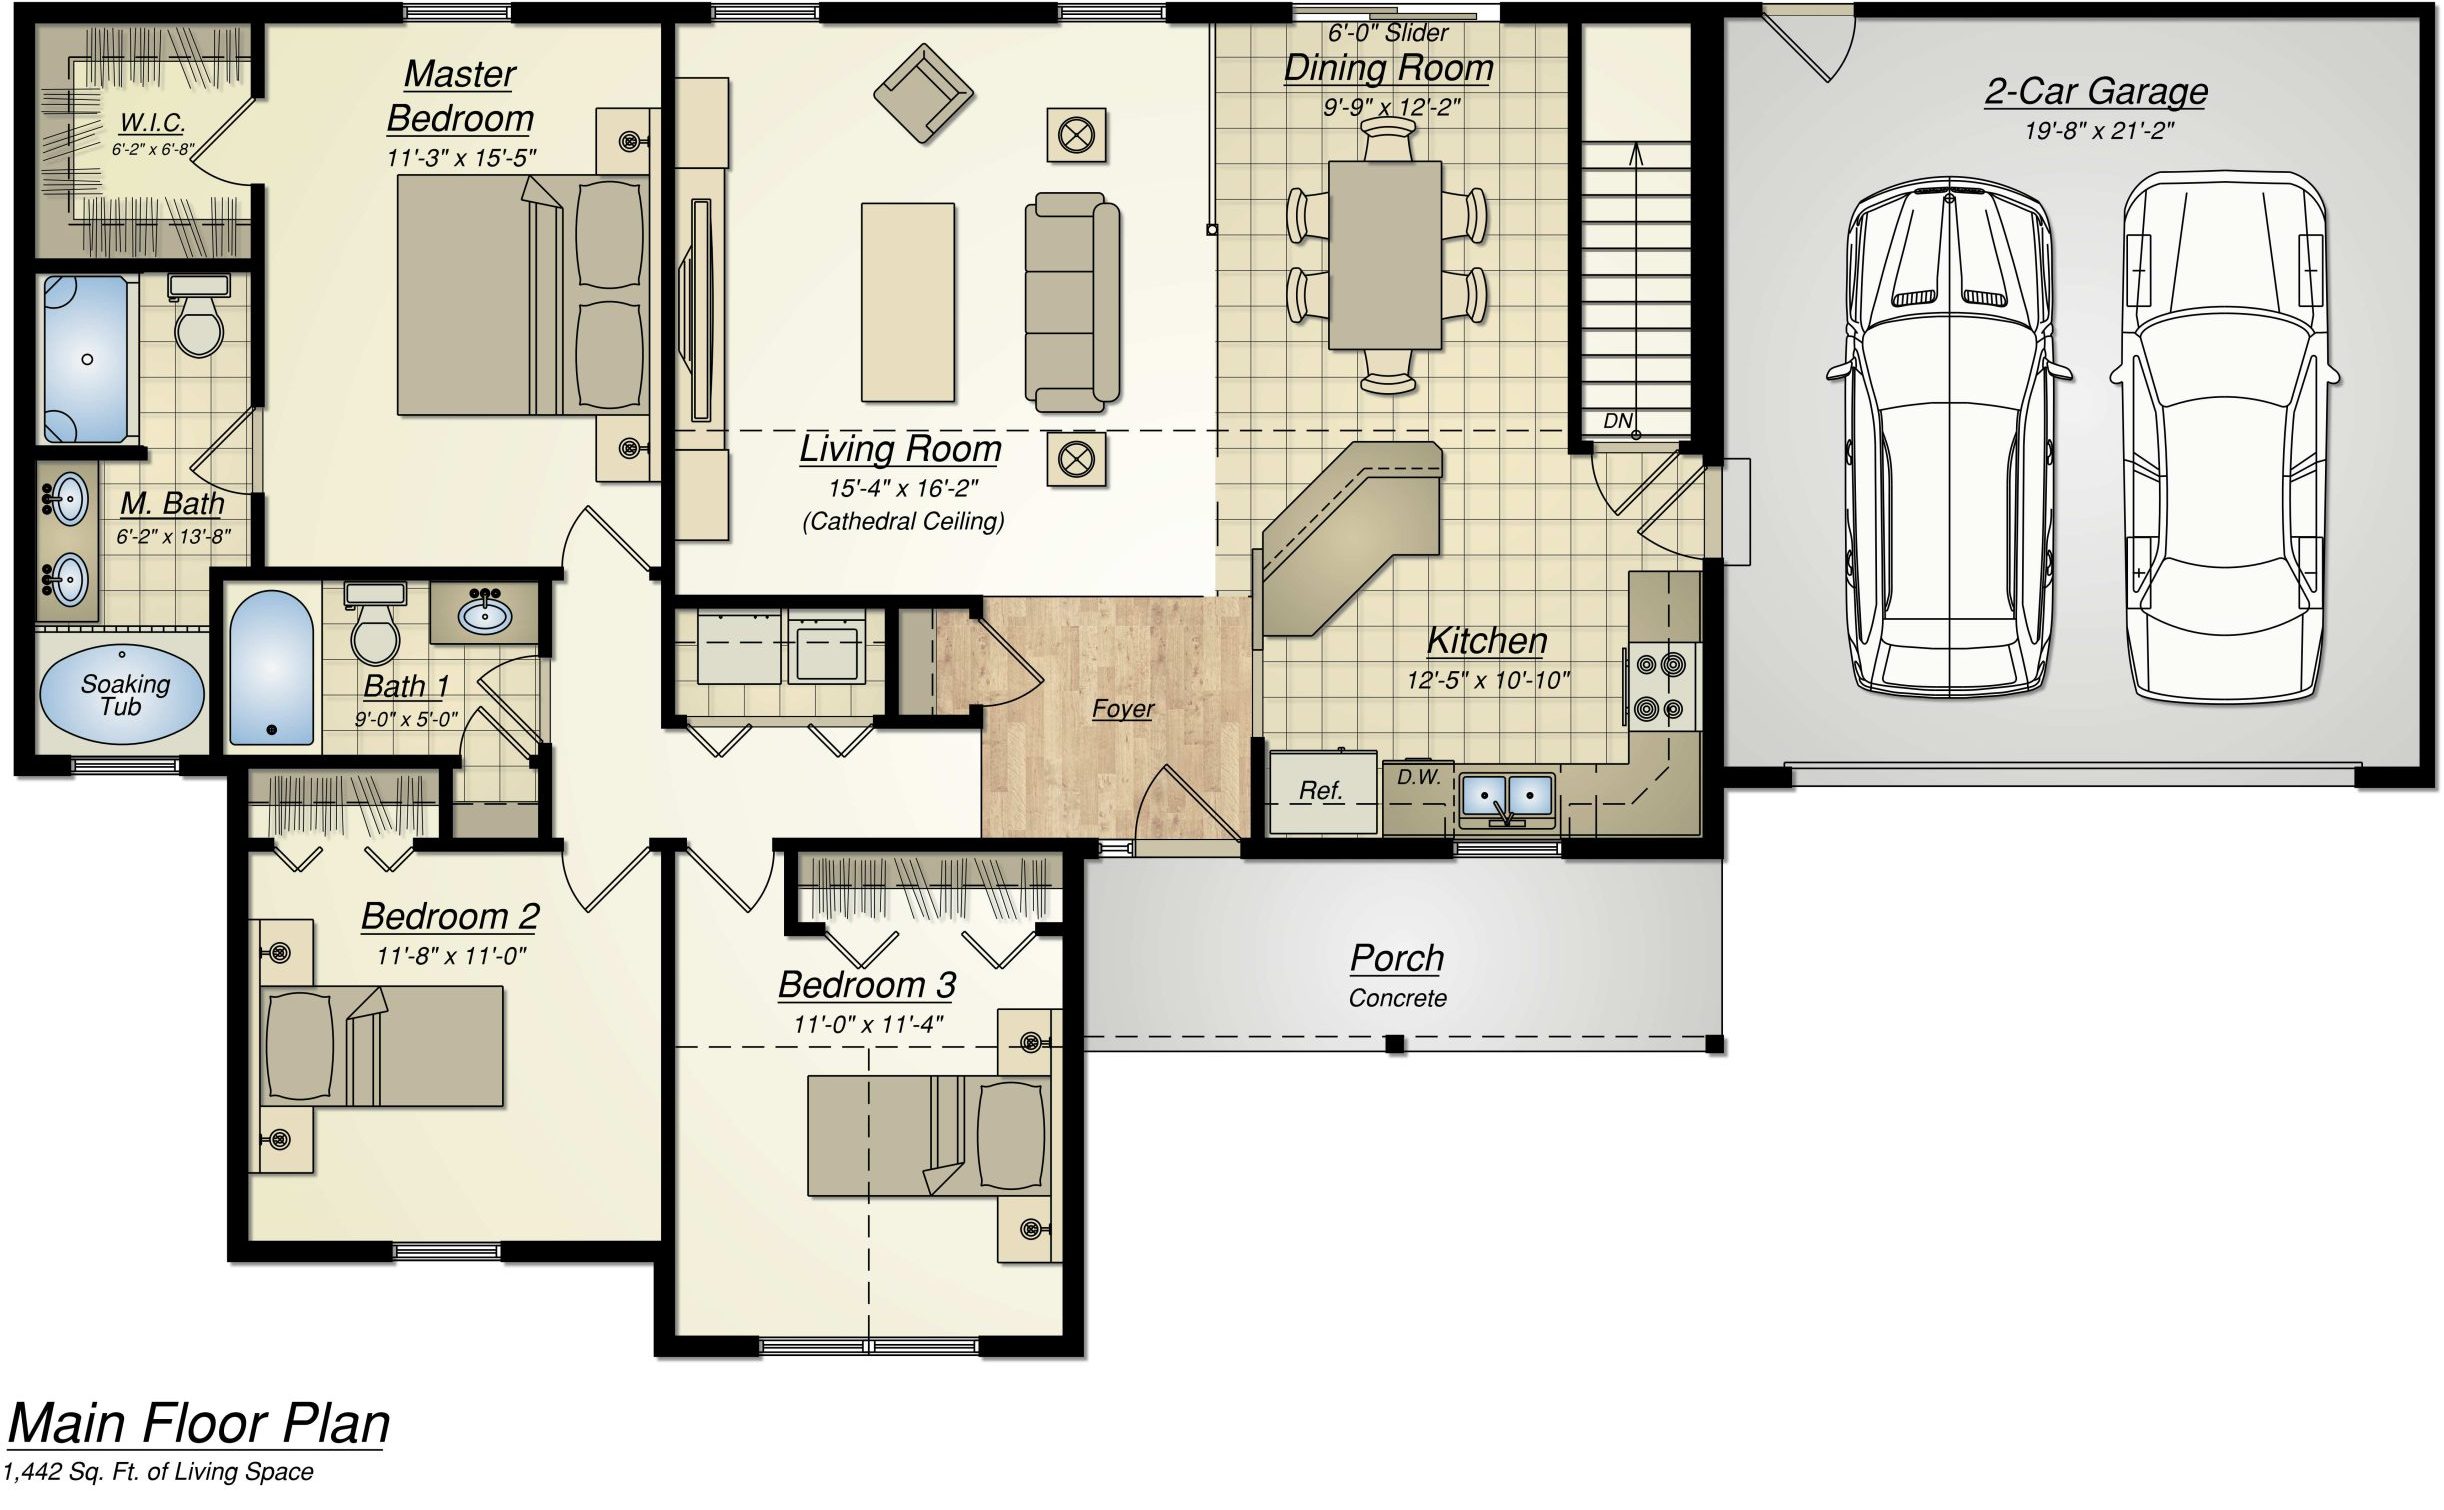 Main Floor Plan blueprint 1,442 Sq Foot Living Space